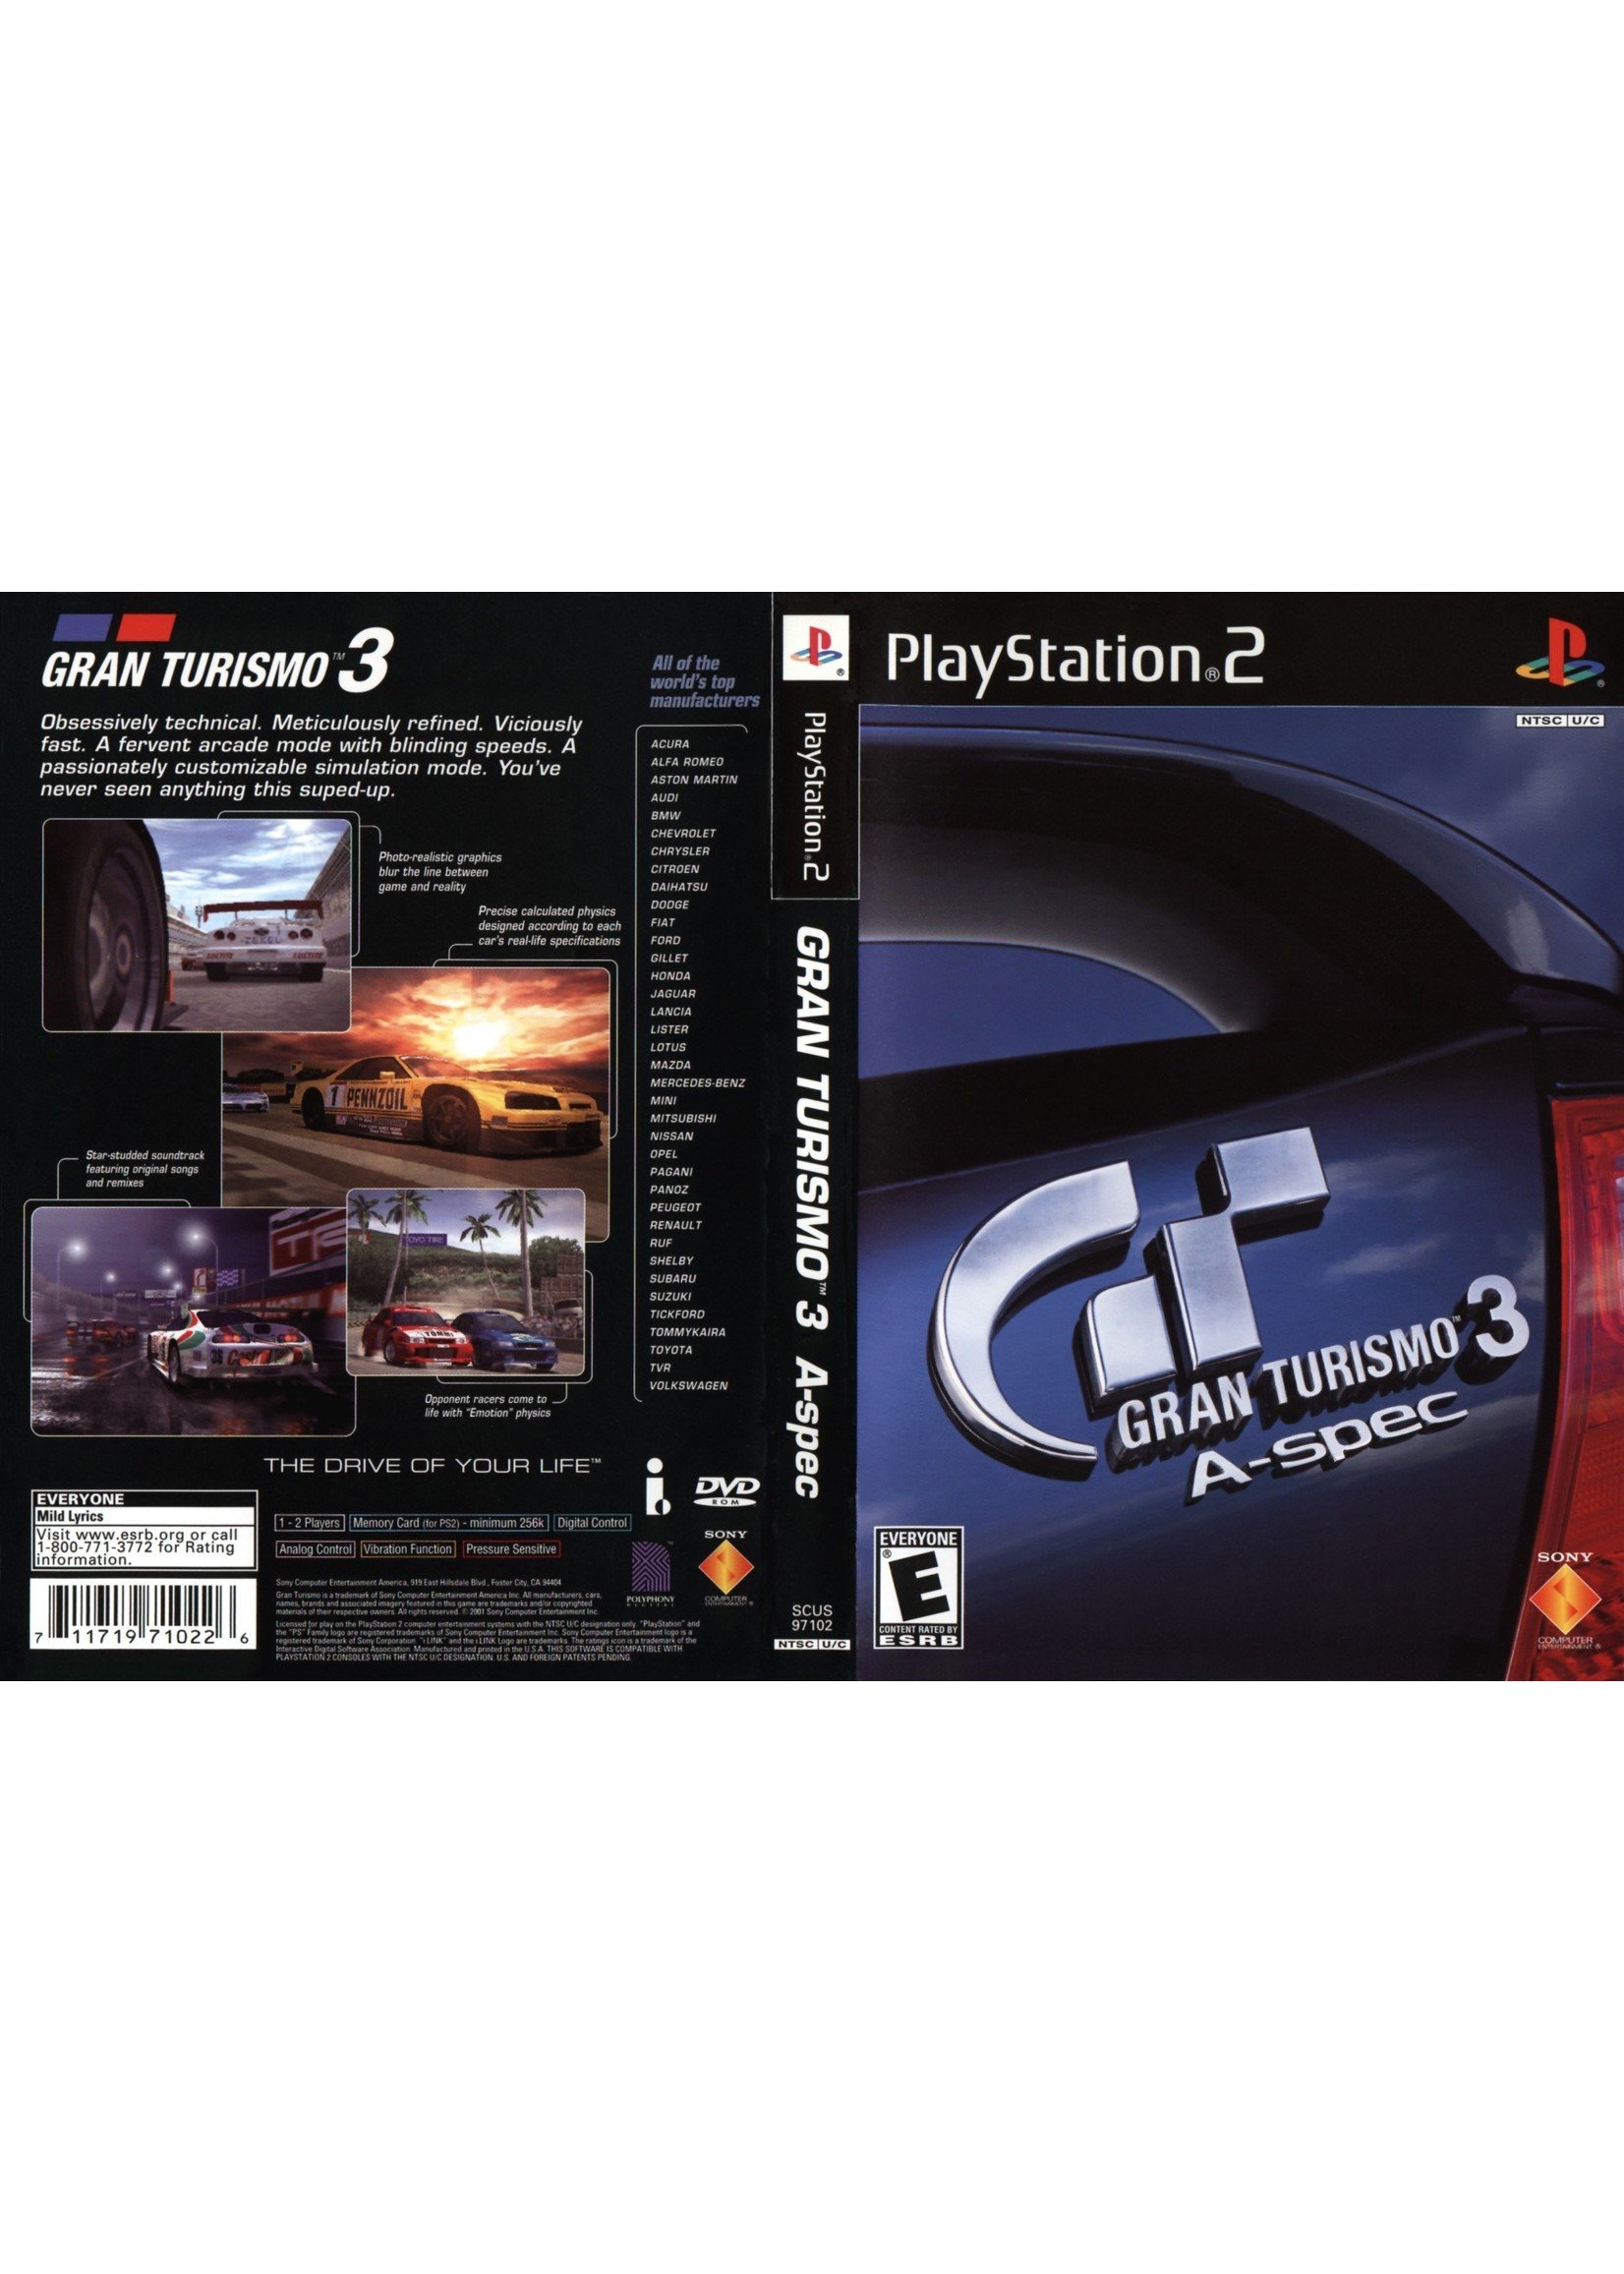 Sony Playstation 2 (PS2) Gran Turismo 3